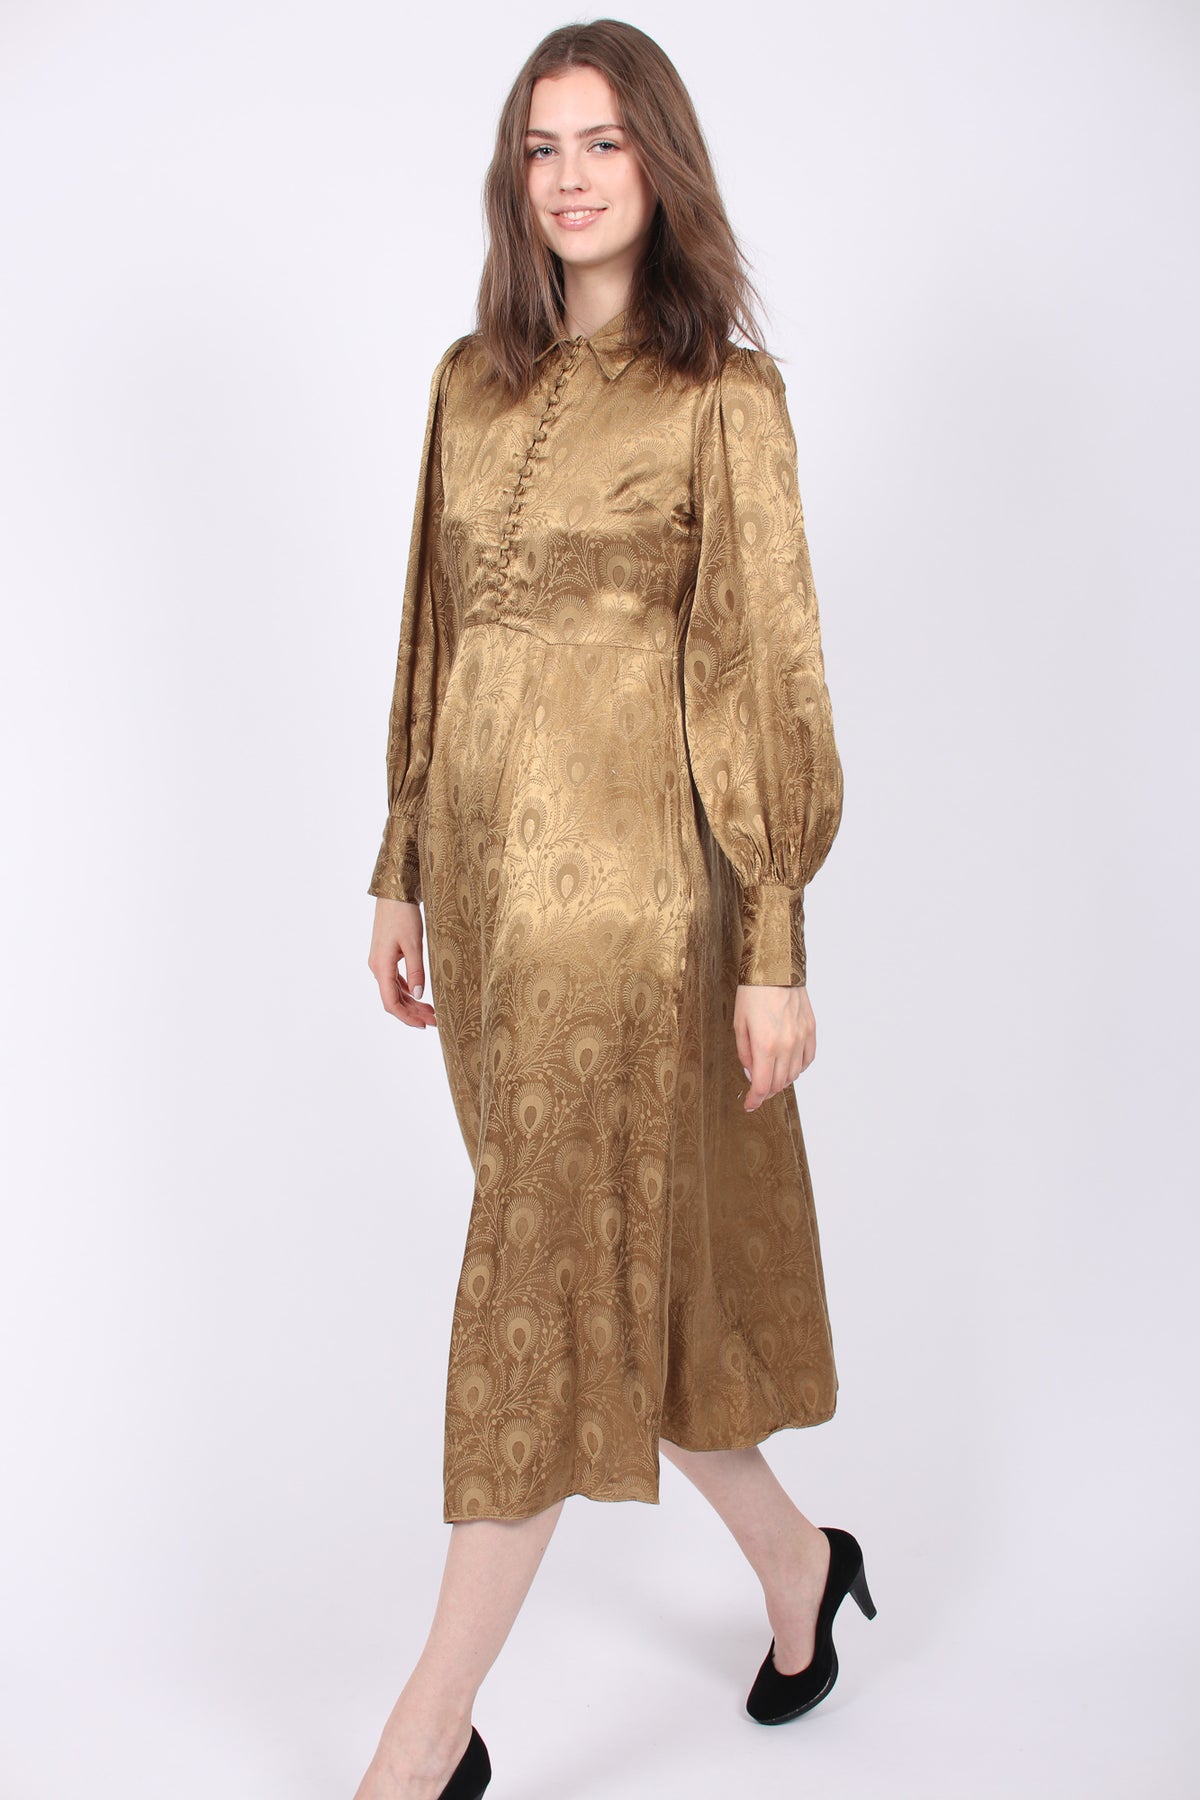 Jaquard Shirt Dress - Olive - ByTimo - Kjoler - VILLOID.no